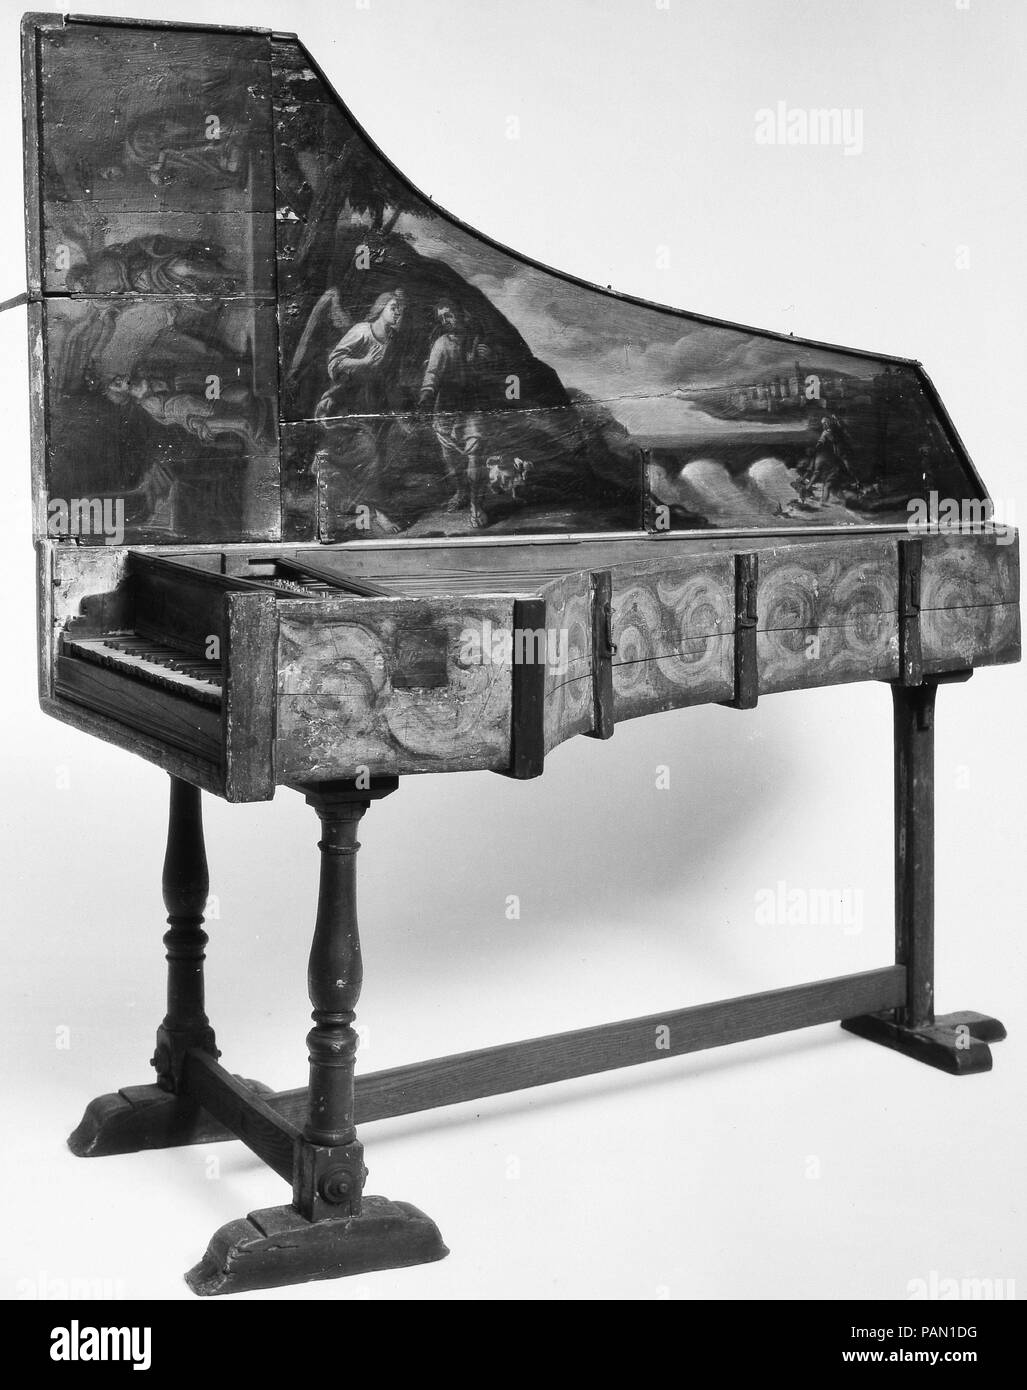 Harpsichord. Culture: Italian. Dimensions: Inner instrument:  L. 168.0 cm, W. 73.2 cm, D. 13.5 cm; 3-octave span  49.6 cm,   Sounding length (longer choir, far plucking point)  C/E132.8 (14.0)  c225.5 (8.5)  c312.4 (5.5). Date: 16th or 17th century. Museum: Metropolitan Museum of Art, New York, USA. Stock Photo